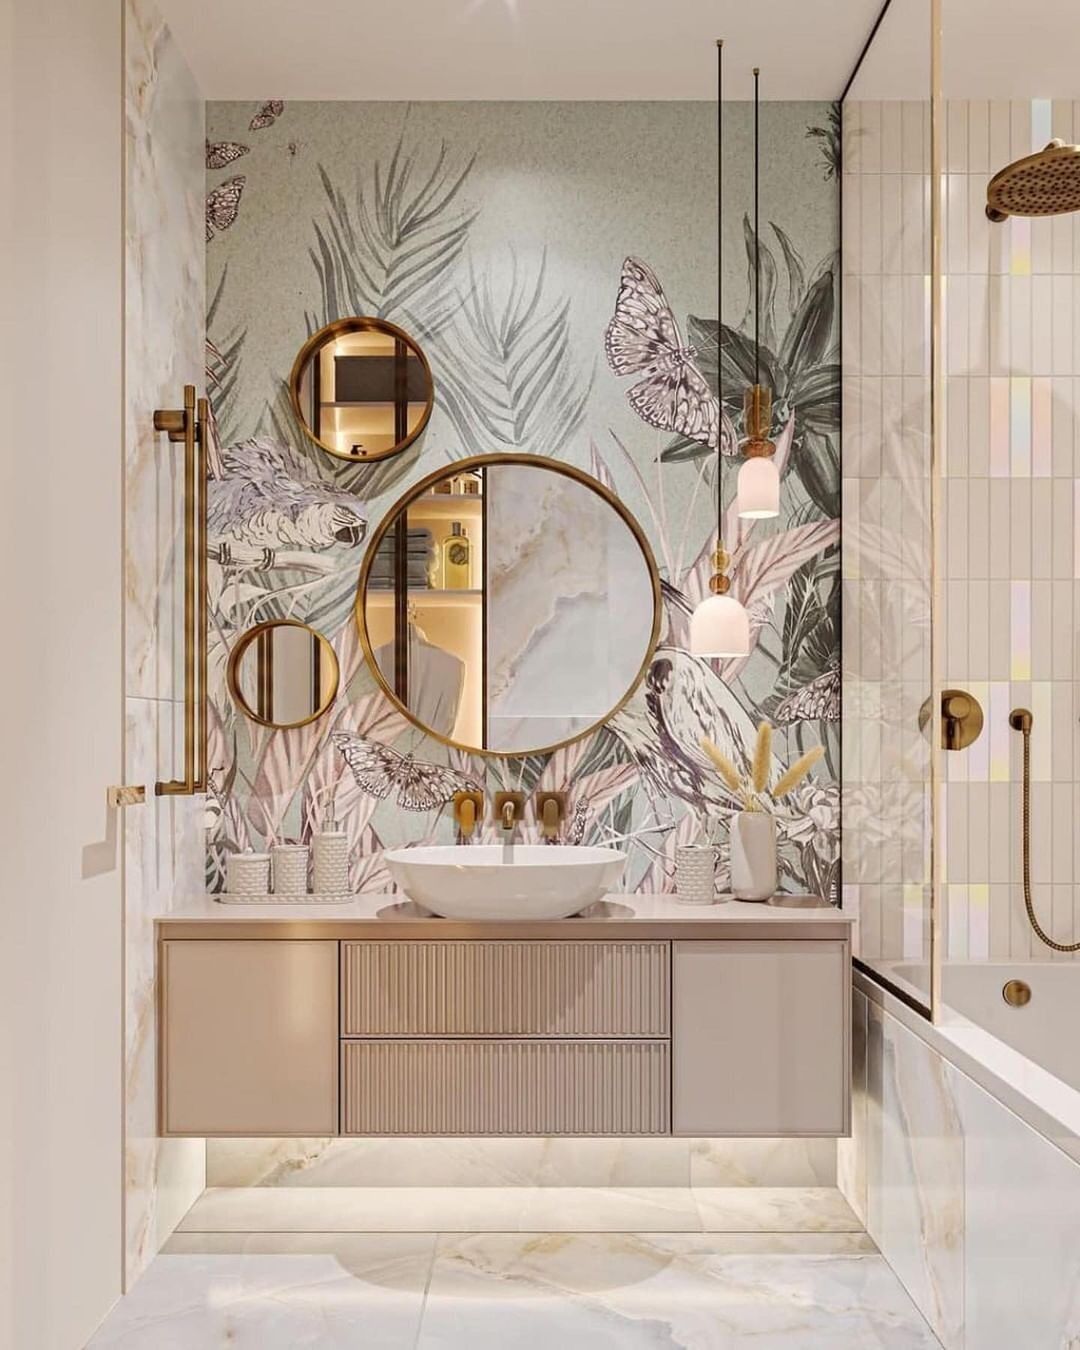 An Elegant Wallpaper for A Sleek Bathroom